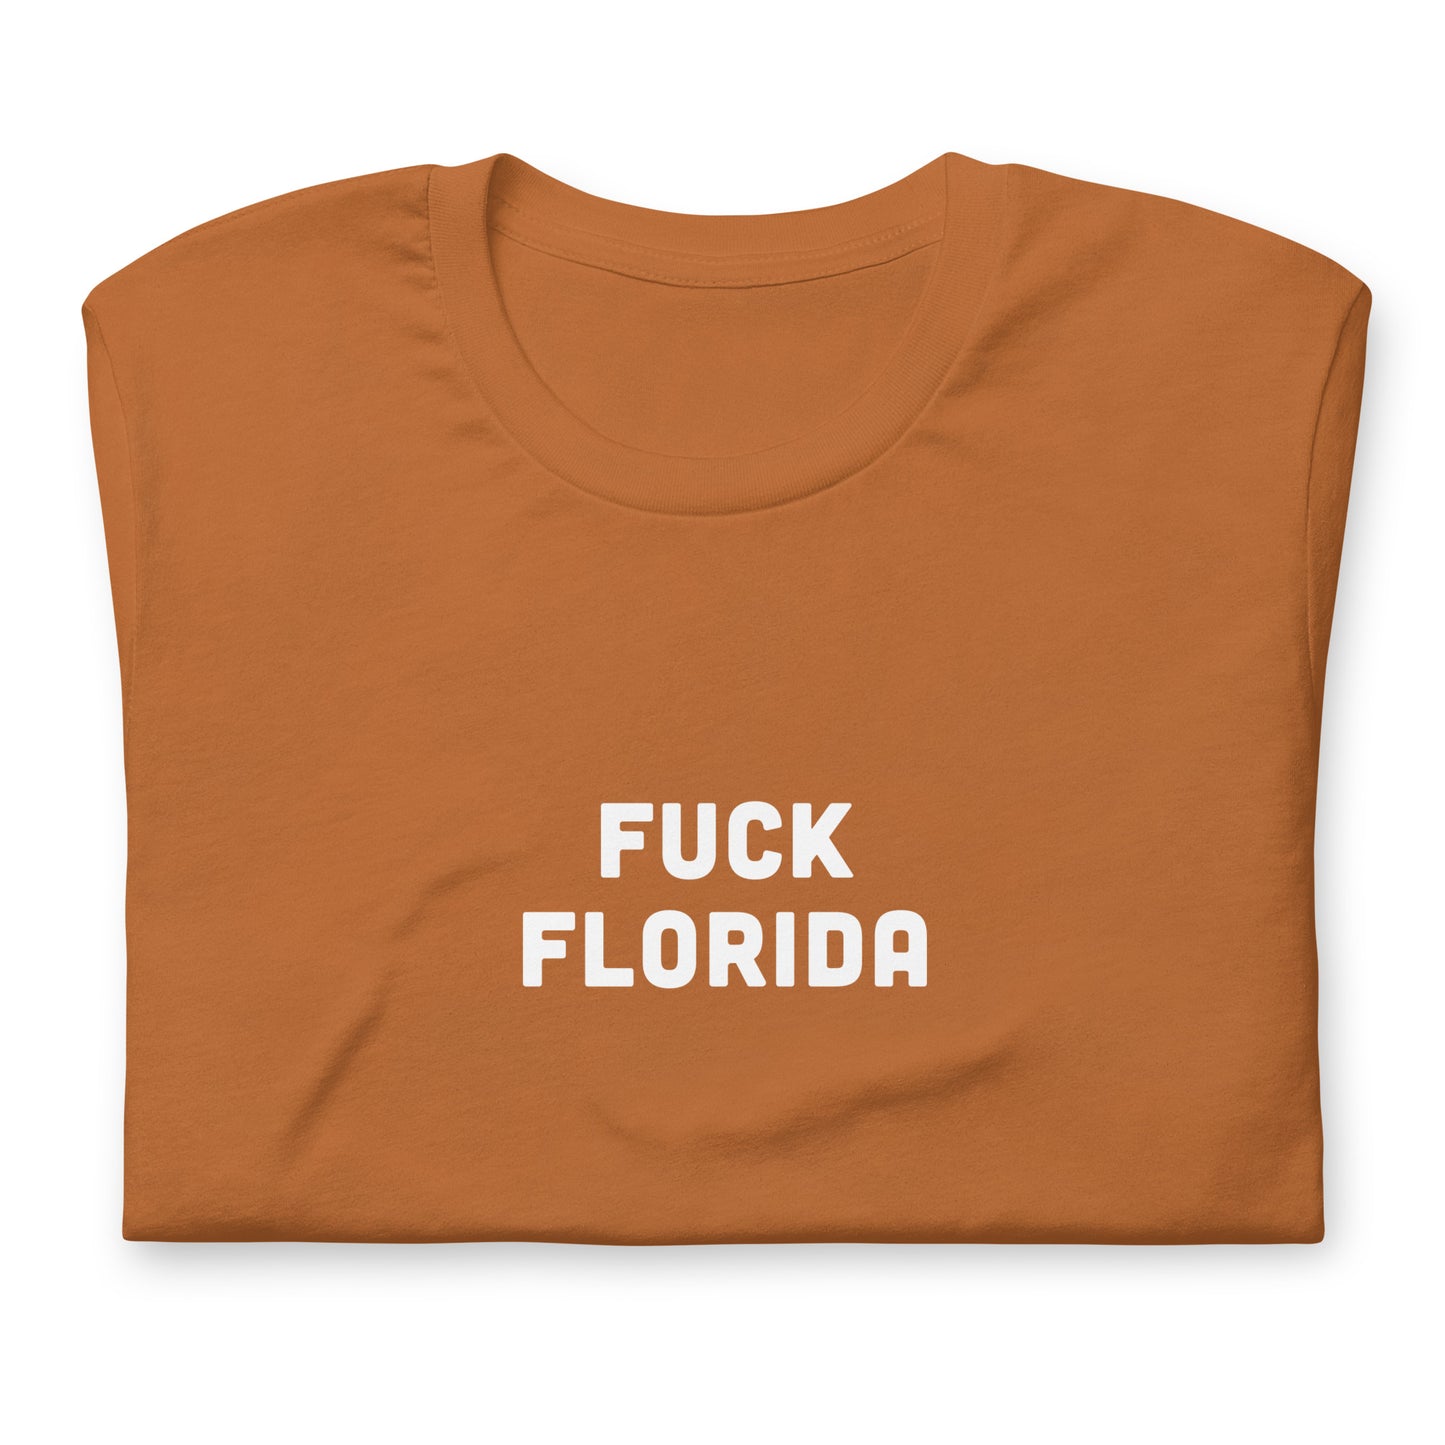 Fuck Florida T-Shirt Size XL Color Navy